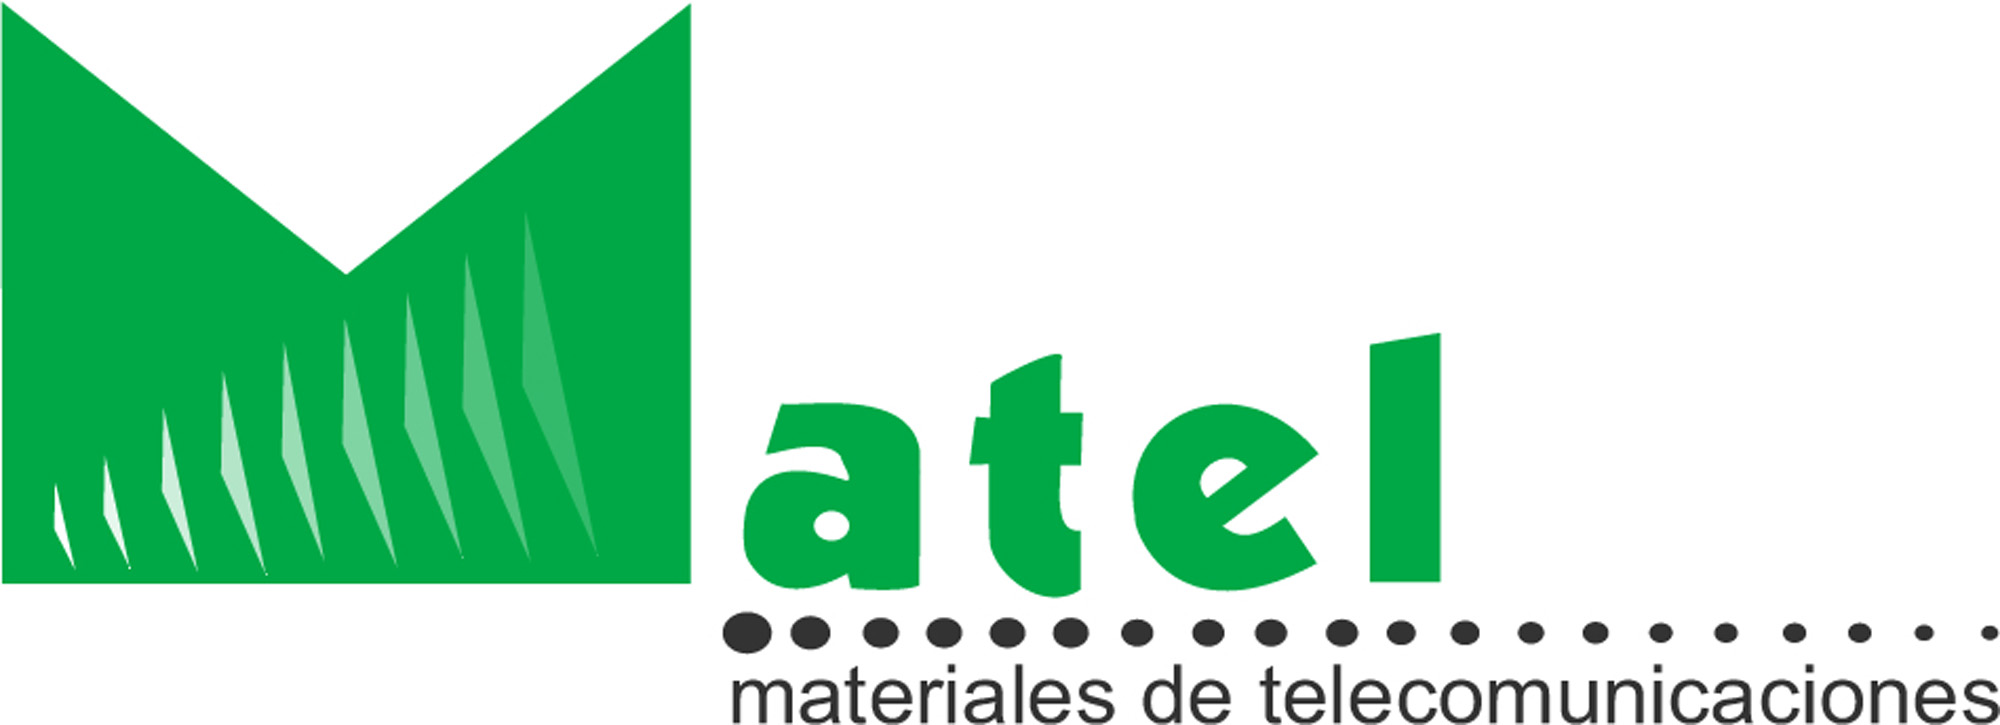 matel logo new (1)